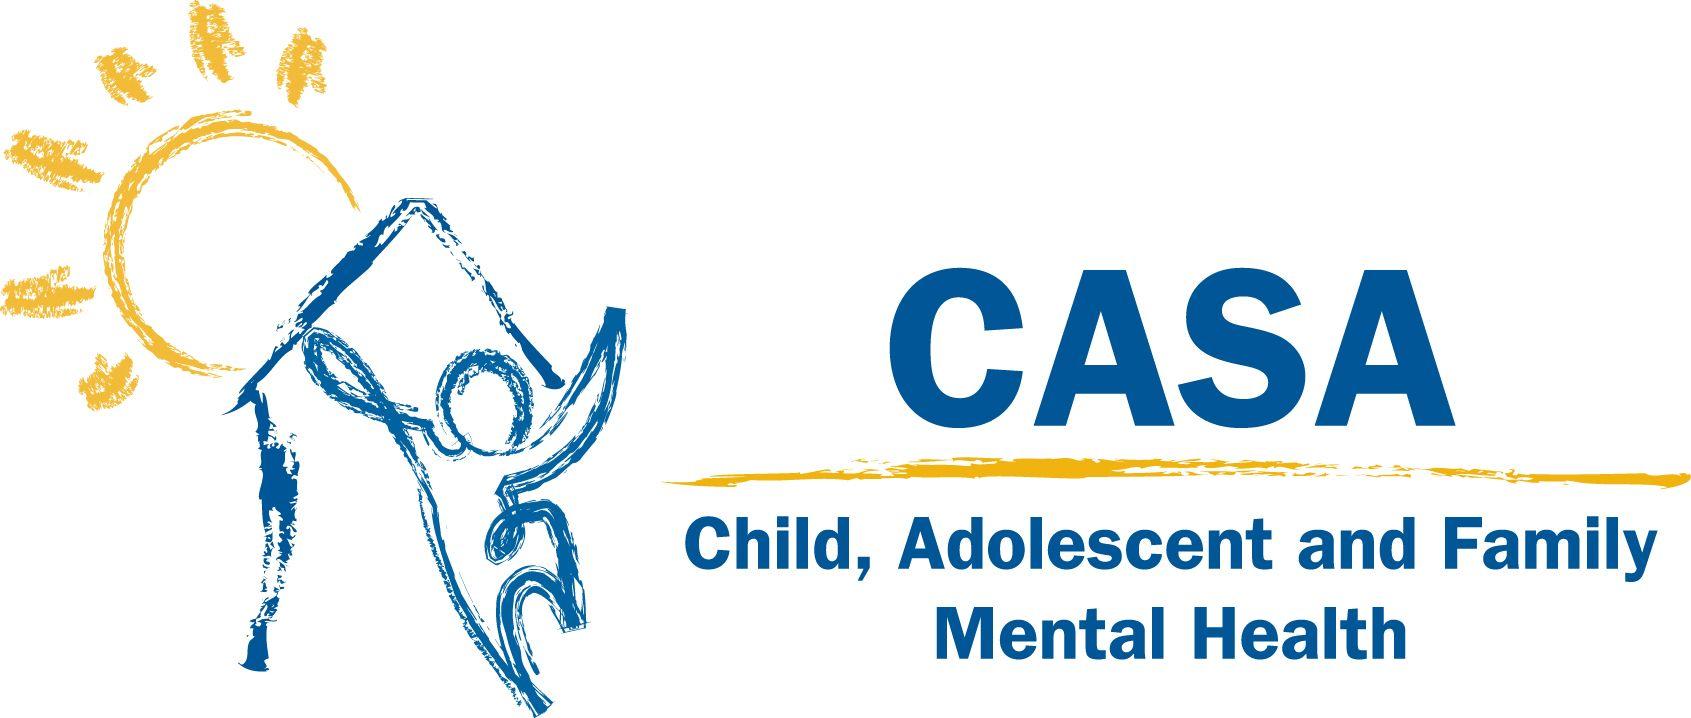 Casa Logo - Home. CASA Child, Adolescent and Family Mental Health